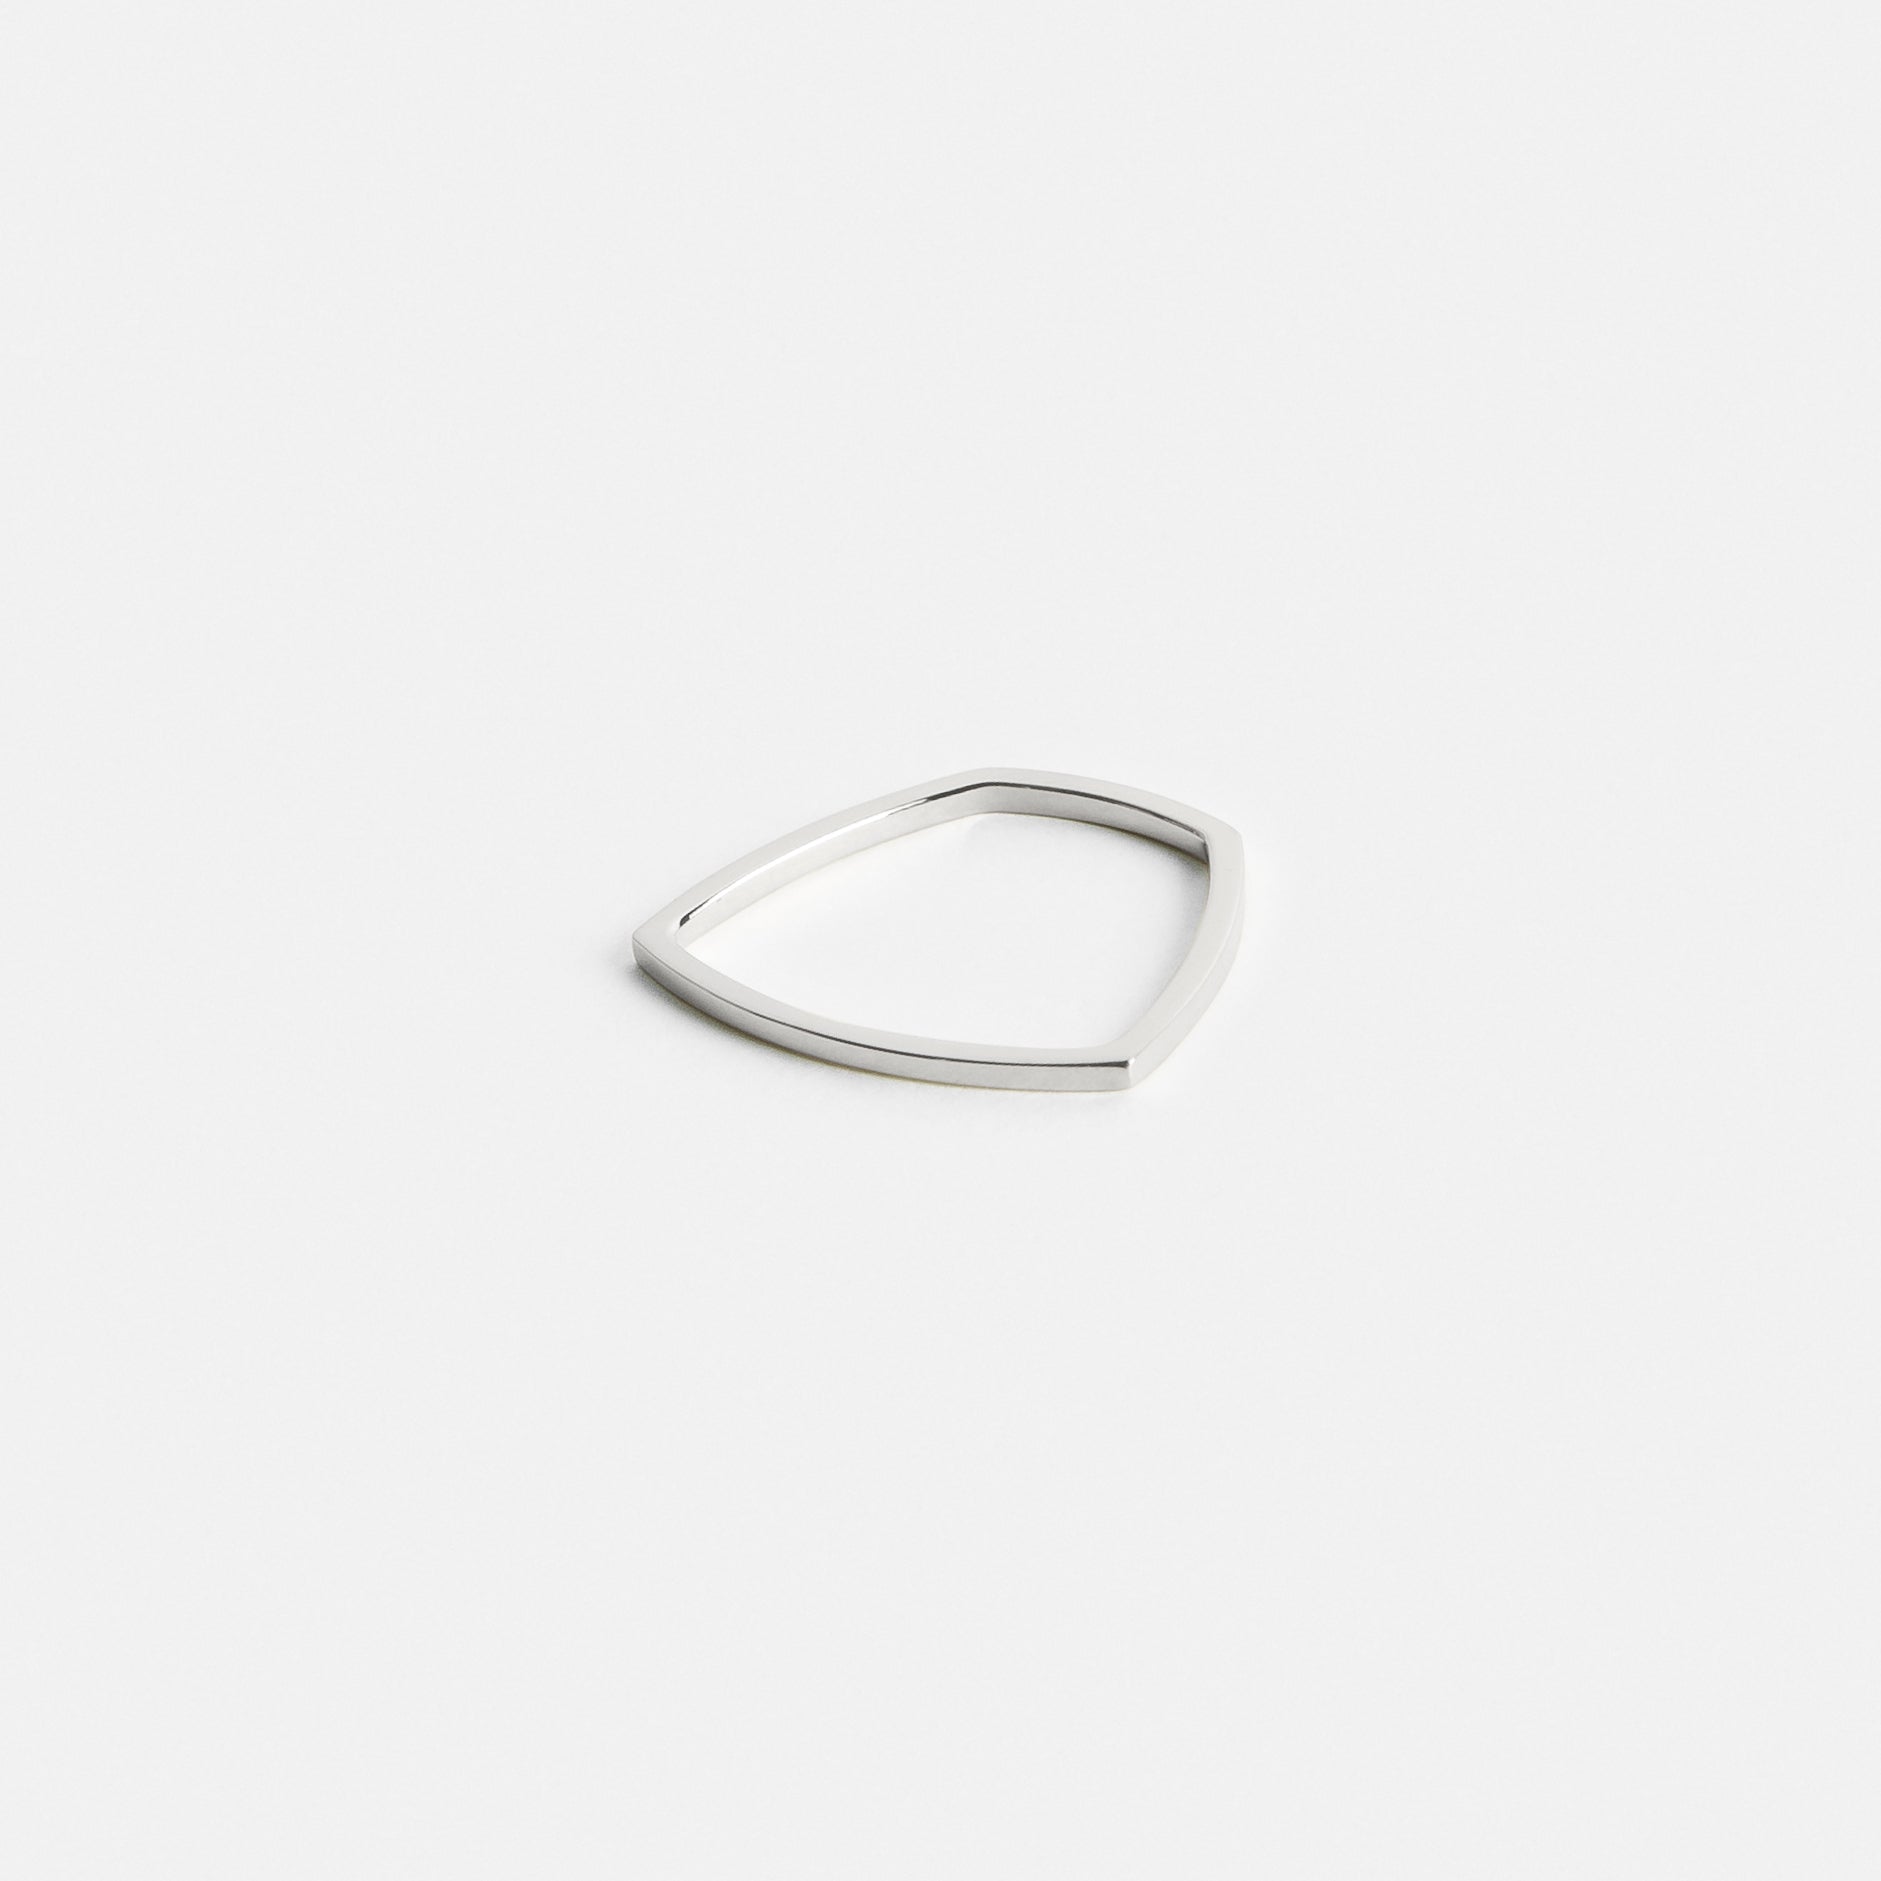 Ilga Unisex Ring in Sterling Silver by SHW Fine Jewelry in NYC